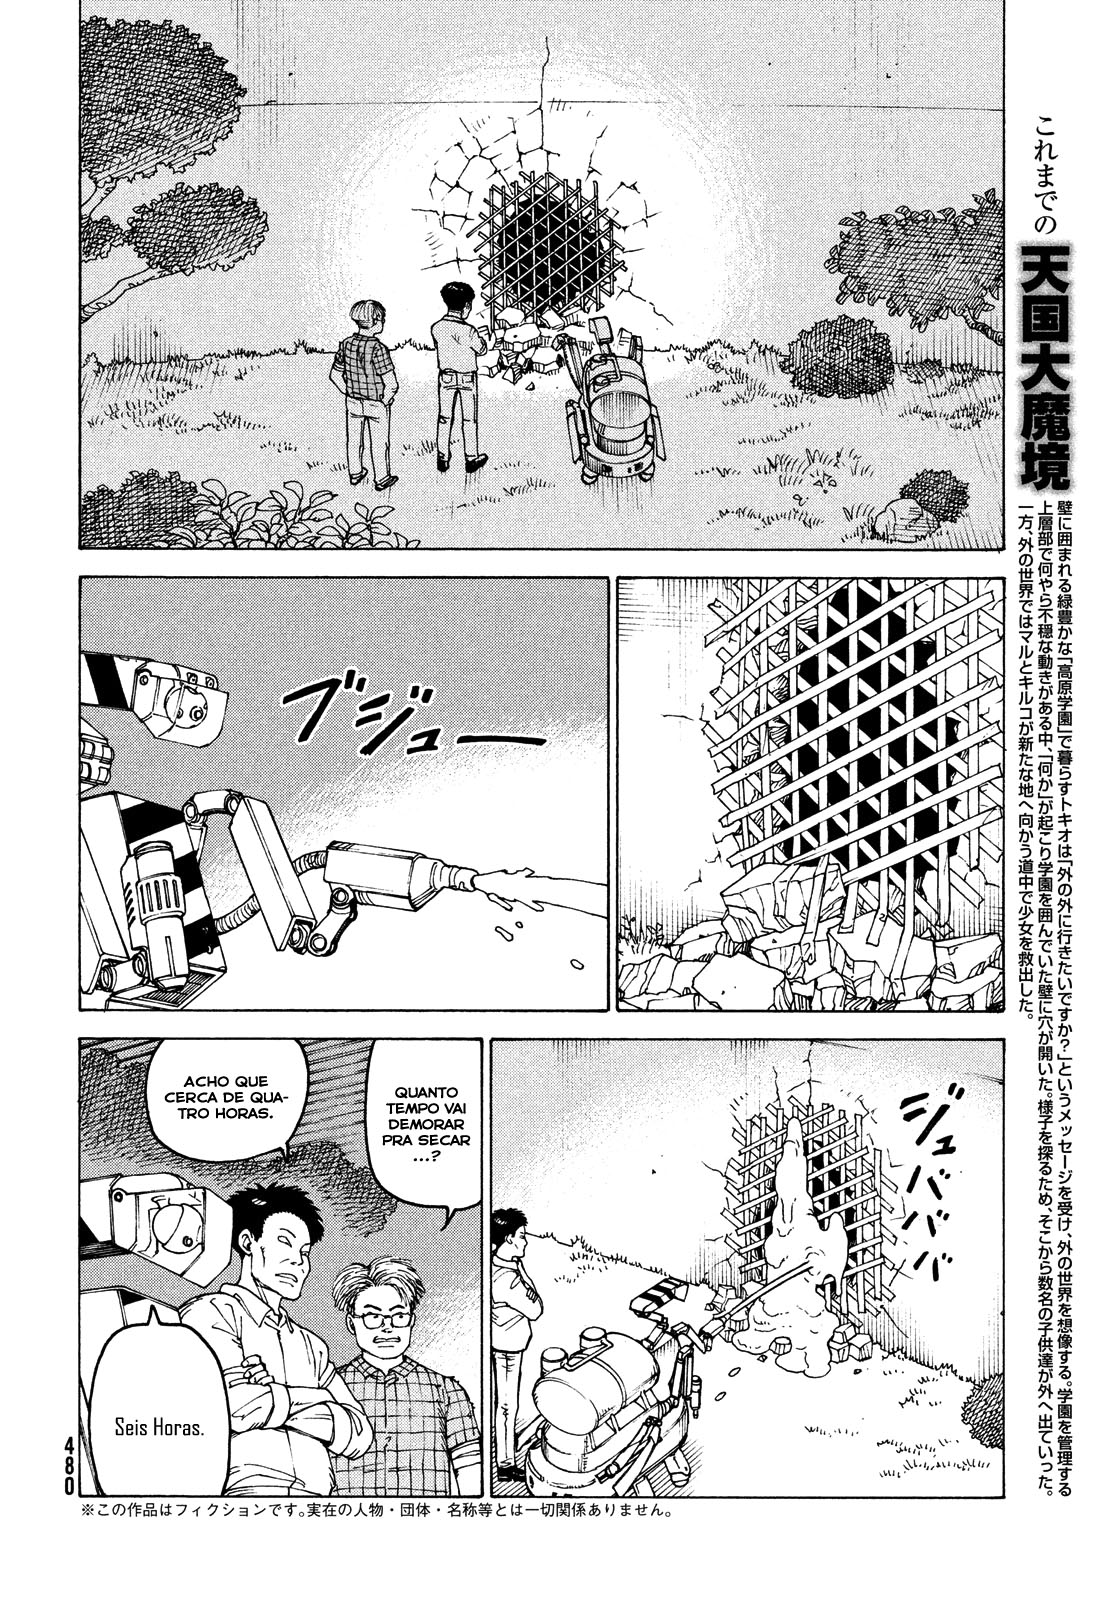 Tengoku Daimakyou Capítulo 32 - Manga Online